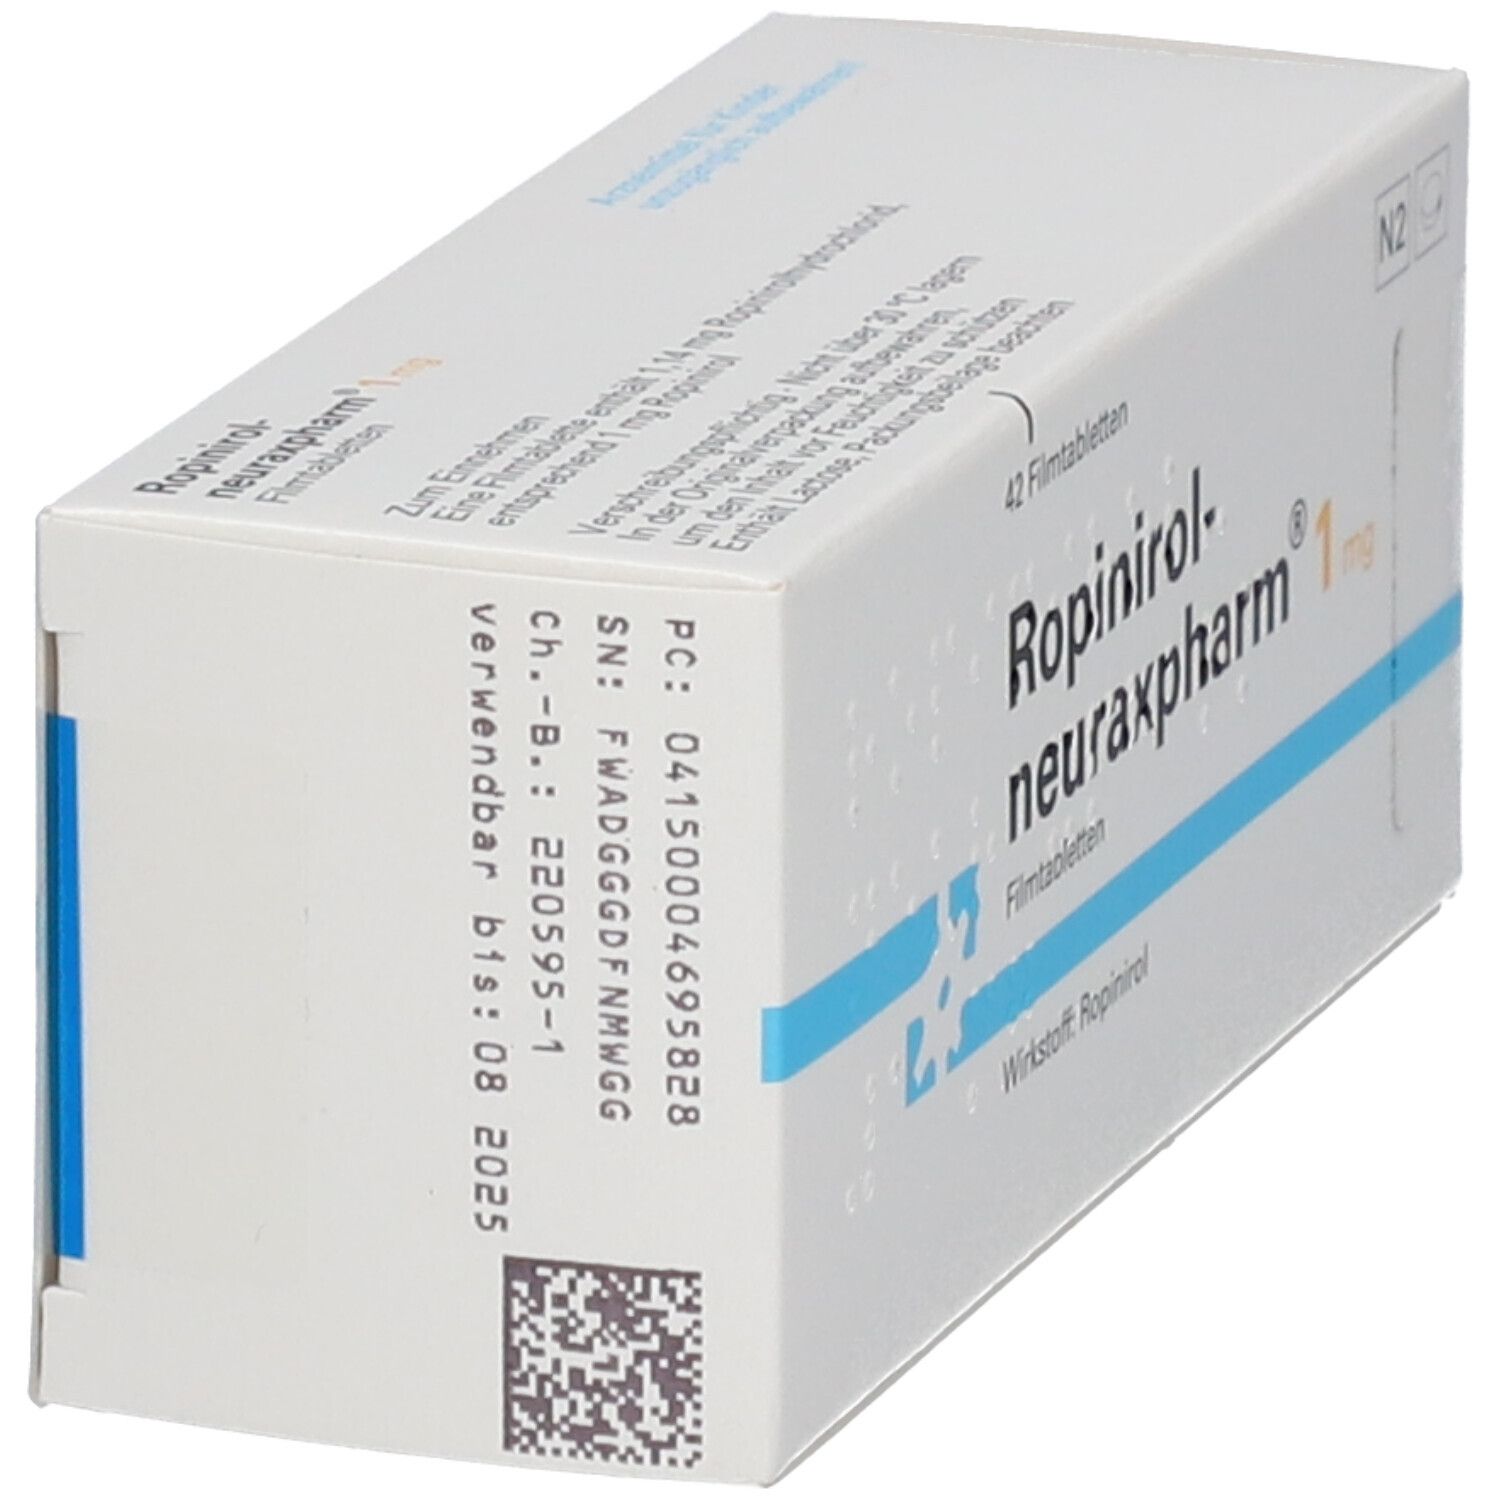 Ropinirol-neuraxpharm® 1 mg